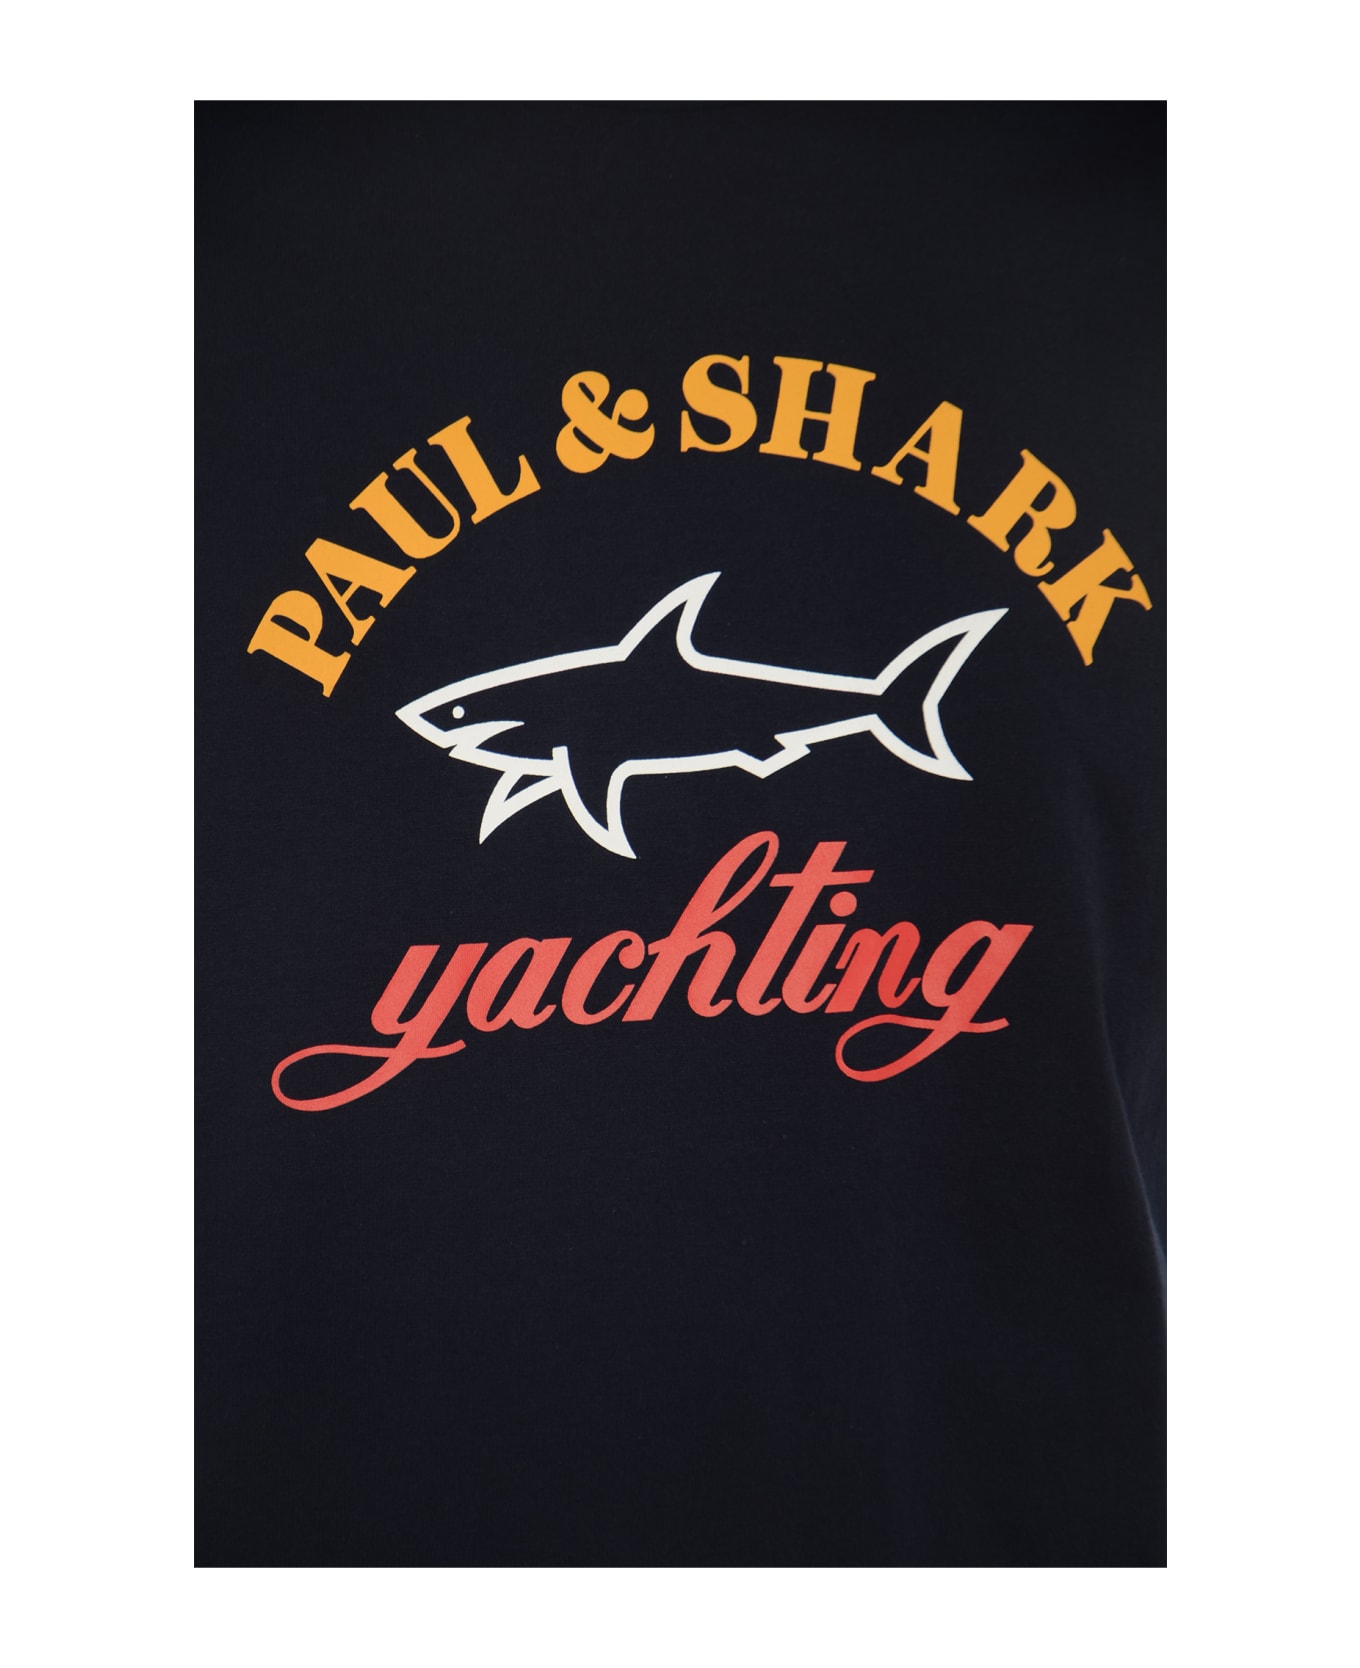 Paul&Shark Regular Logo Print T-shirt - BLUE